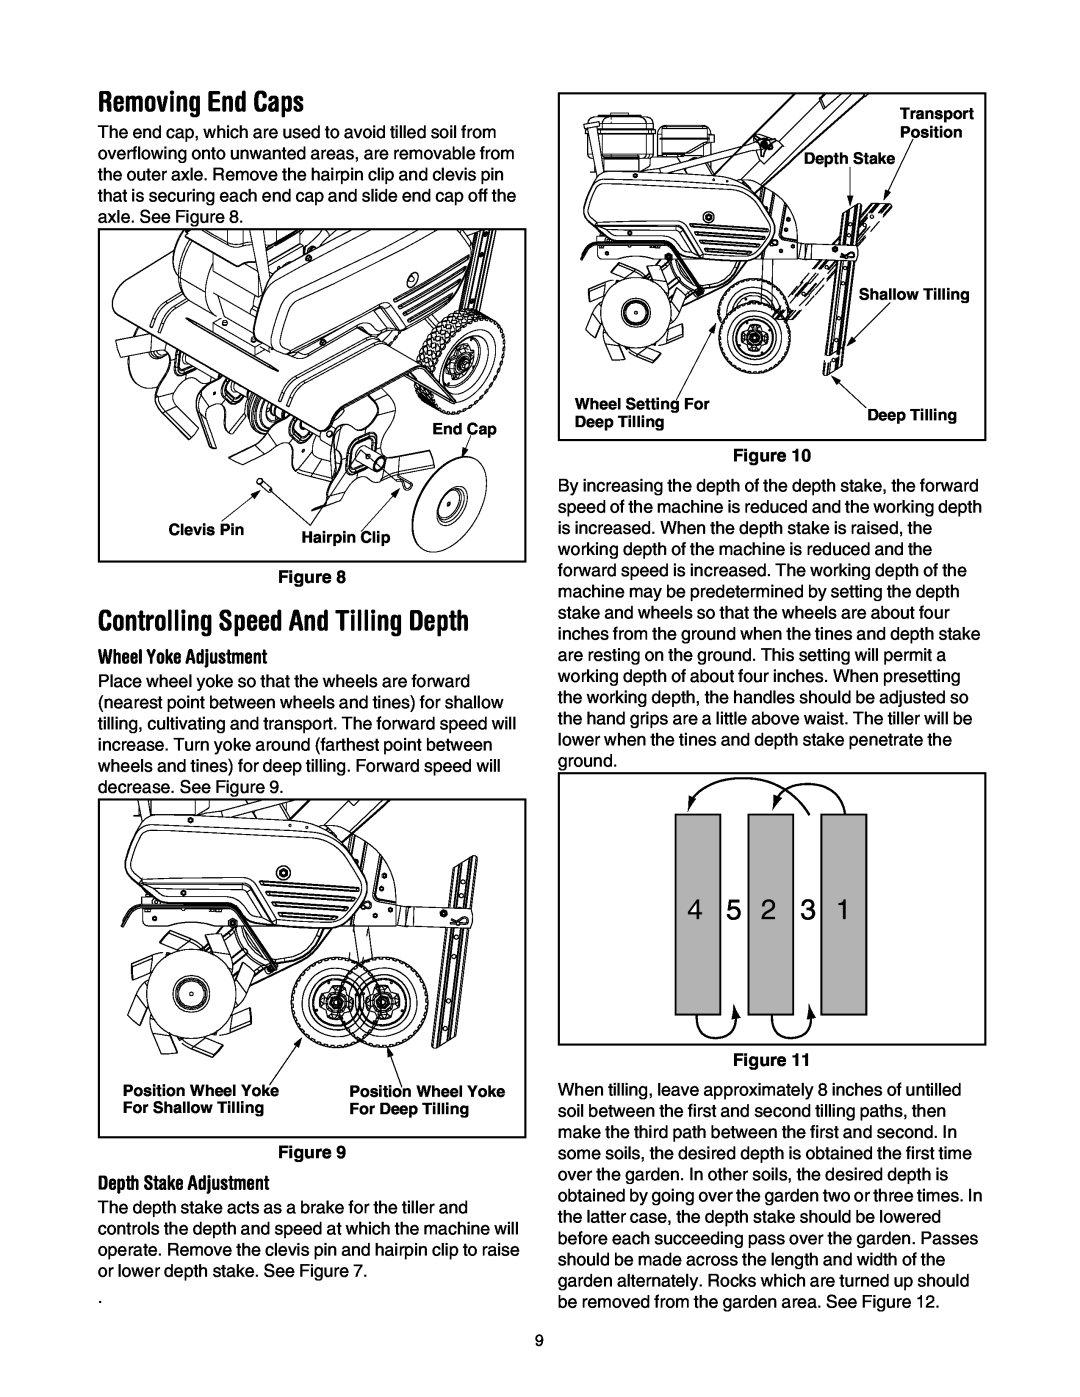 MTD 393 manual Removing End Caps, Controlling Speed And Tilling Depth, Wheel Yoke Adjustment, Depth Stake Adjustment 